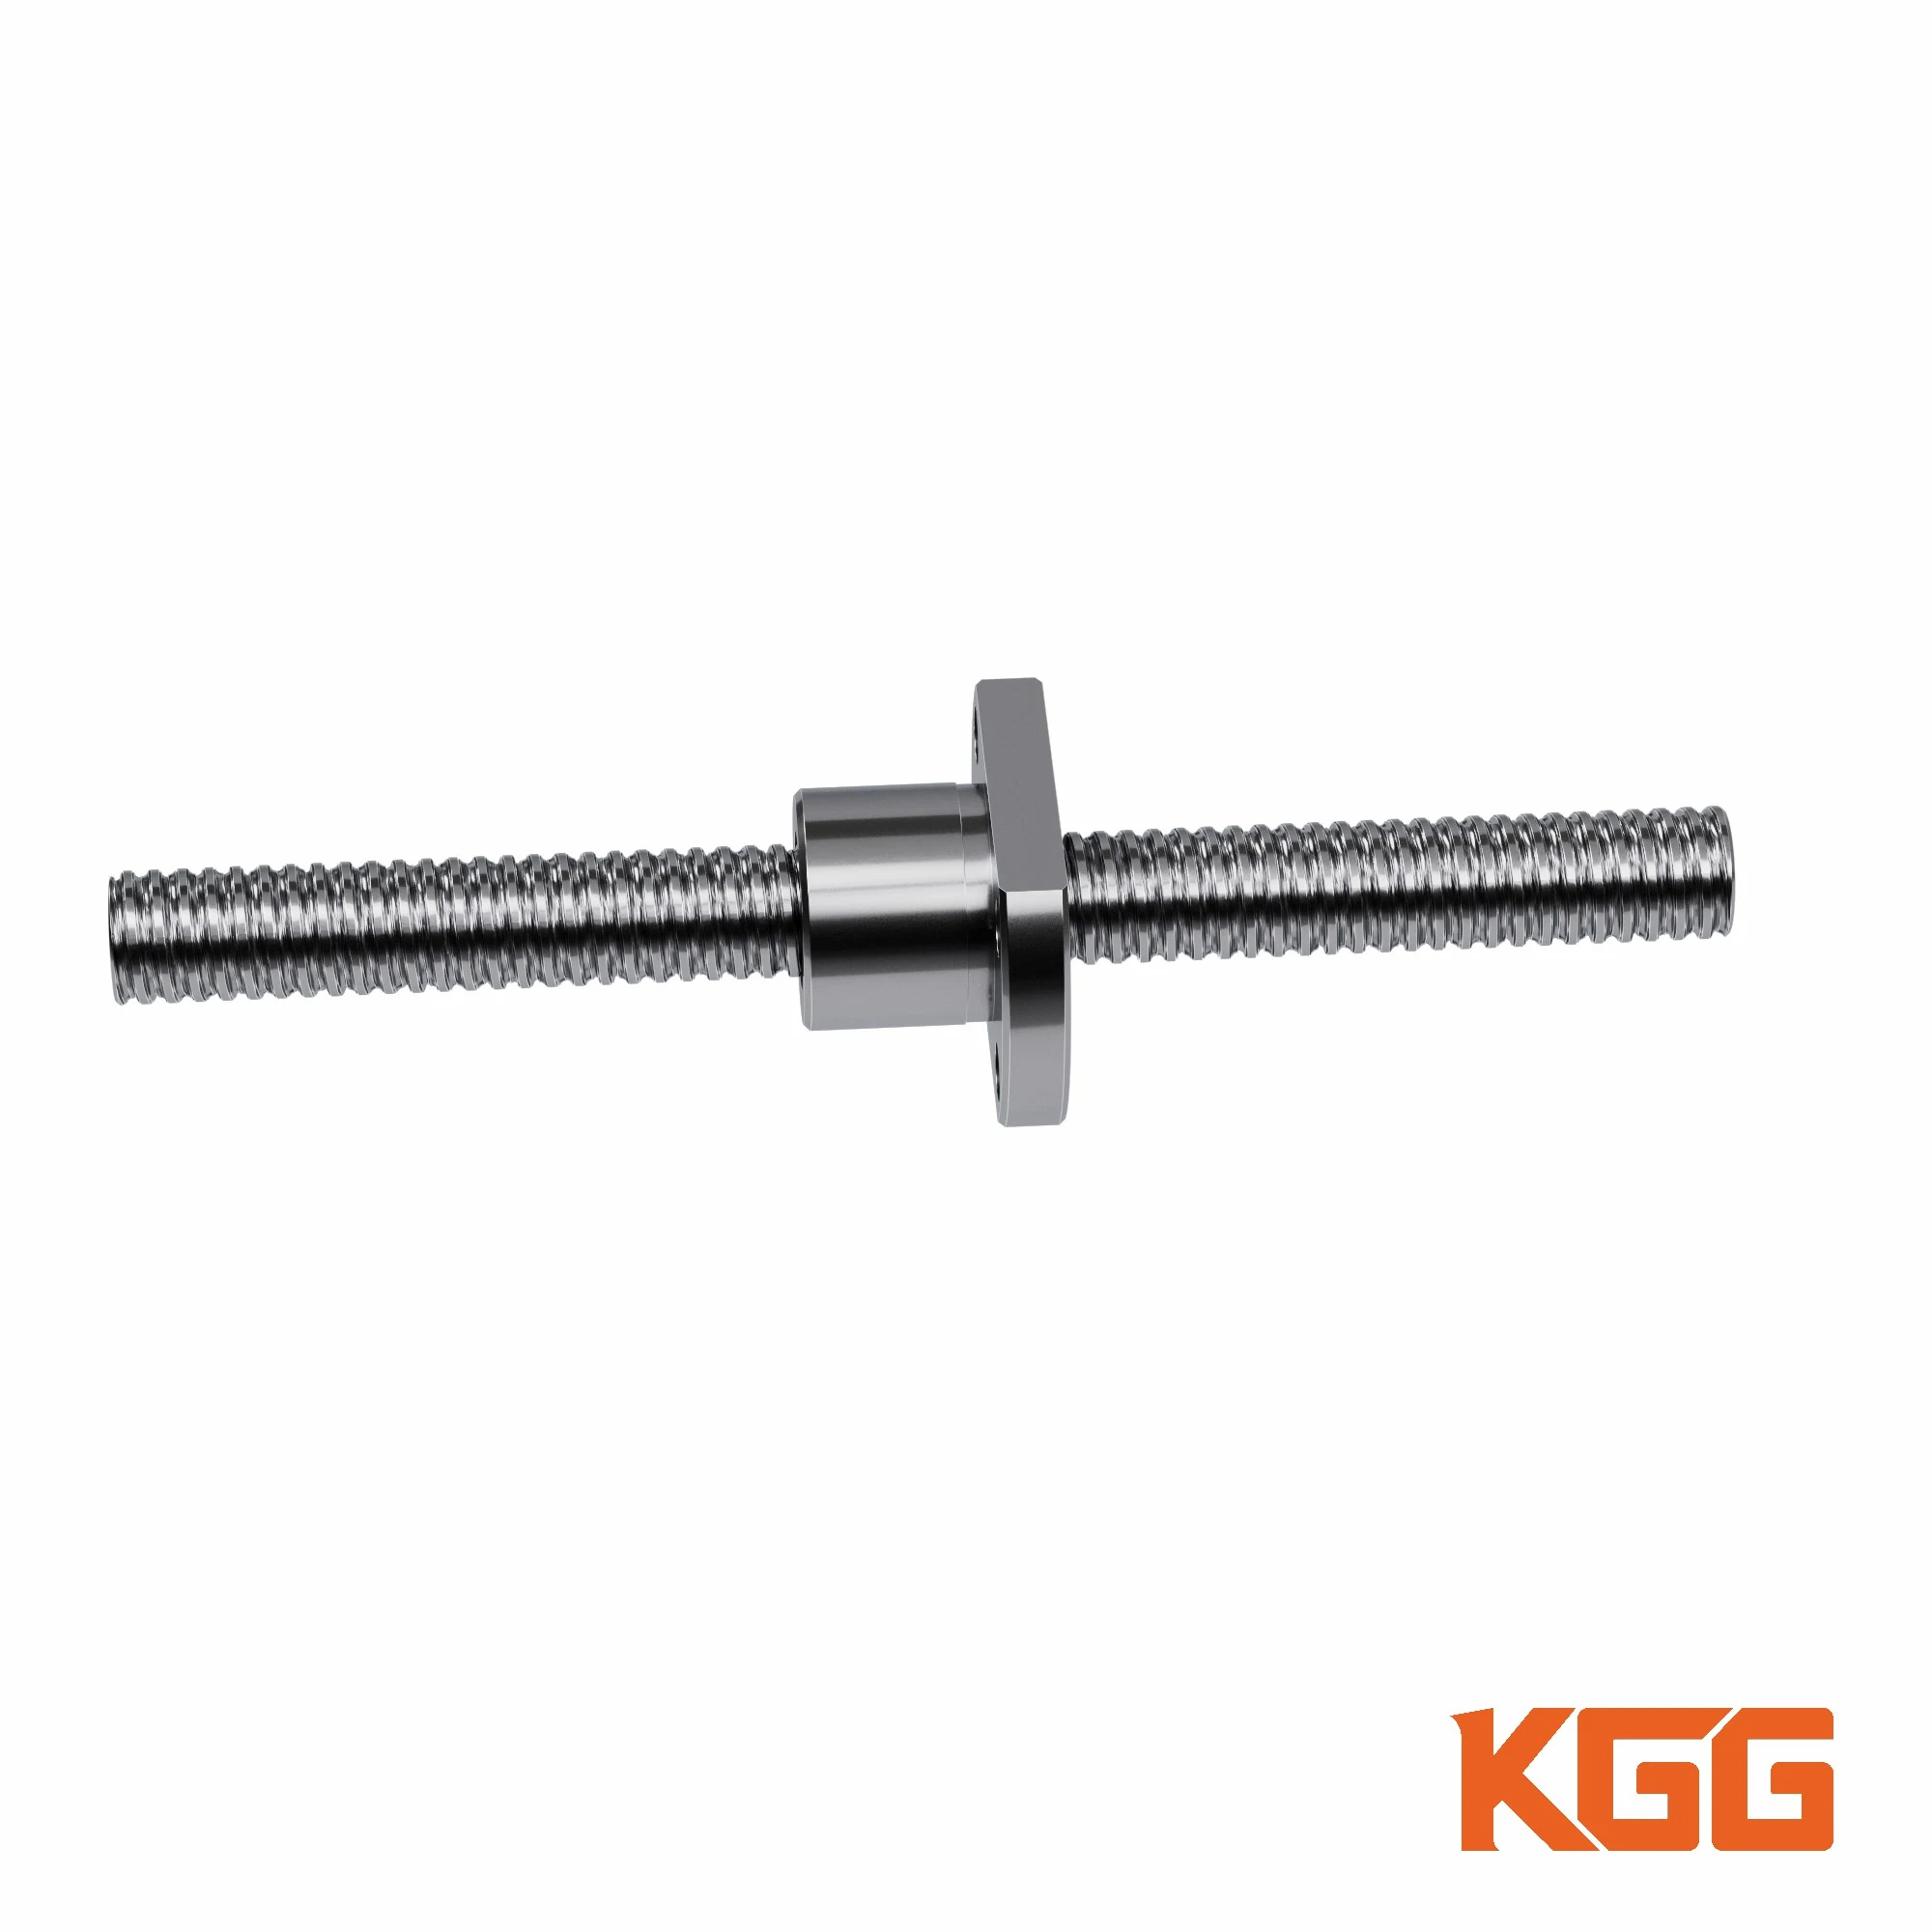 Kgg C10 Rolled Thread Ball Screw for Building Curtain Wall (GSR Series, Lead: 2.5mm, Shaft: 8mm)